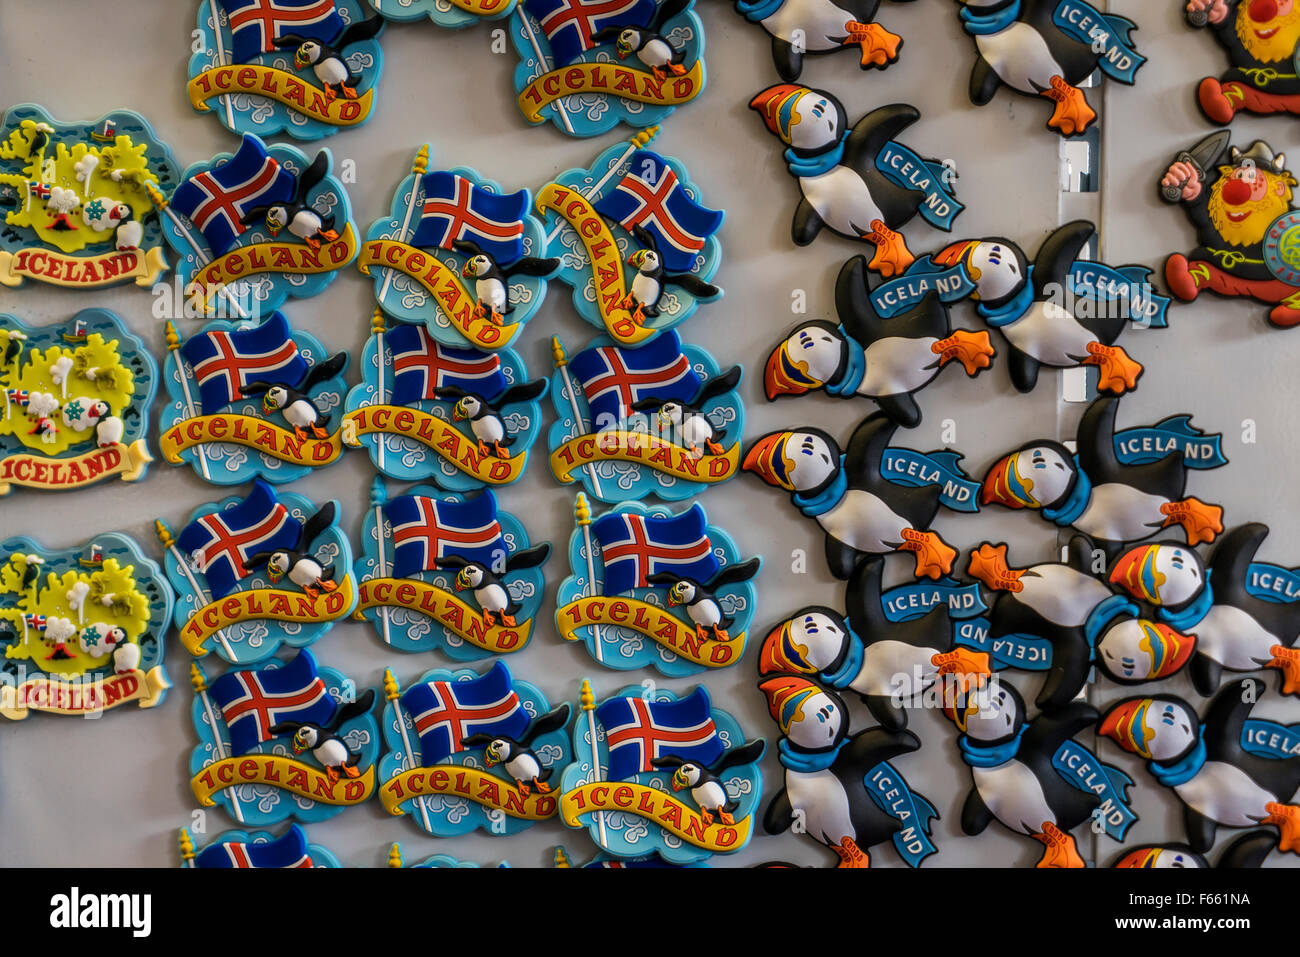 Magnete islandese souvenir delle bandiere e i puffini, Reykjavik, Islanda Foto Stock